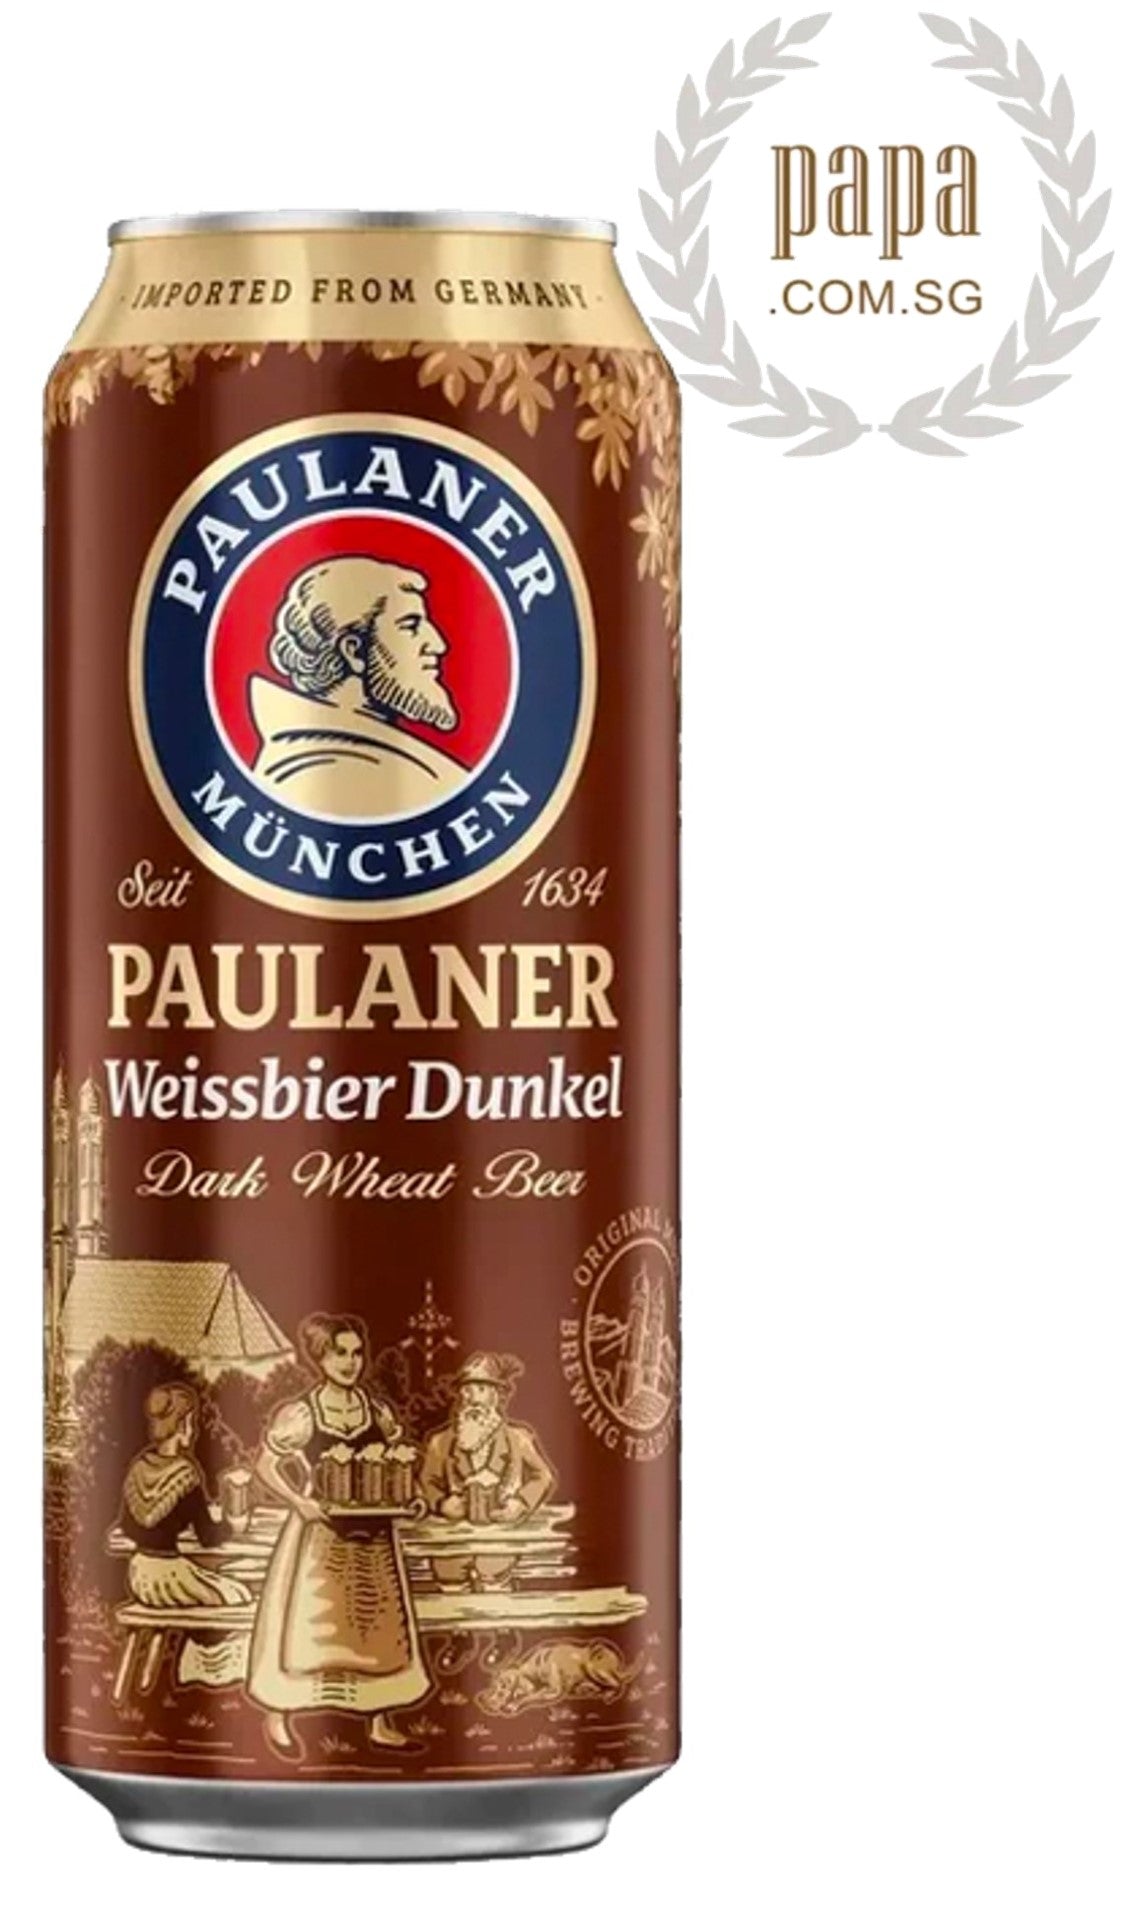 Paulaner Weissbier Dunkel - 5.3% abv - Canned Version